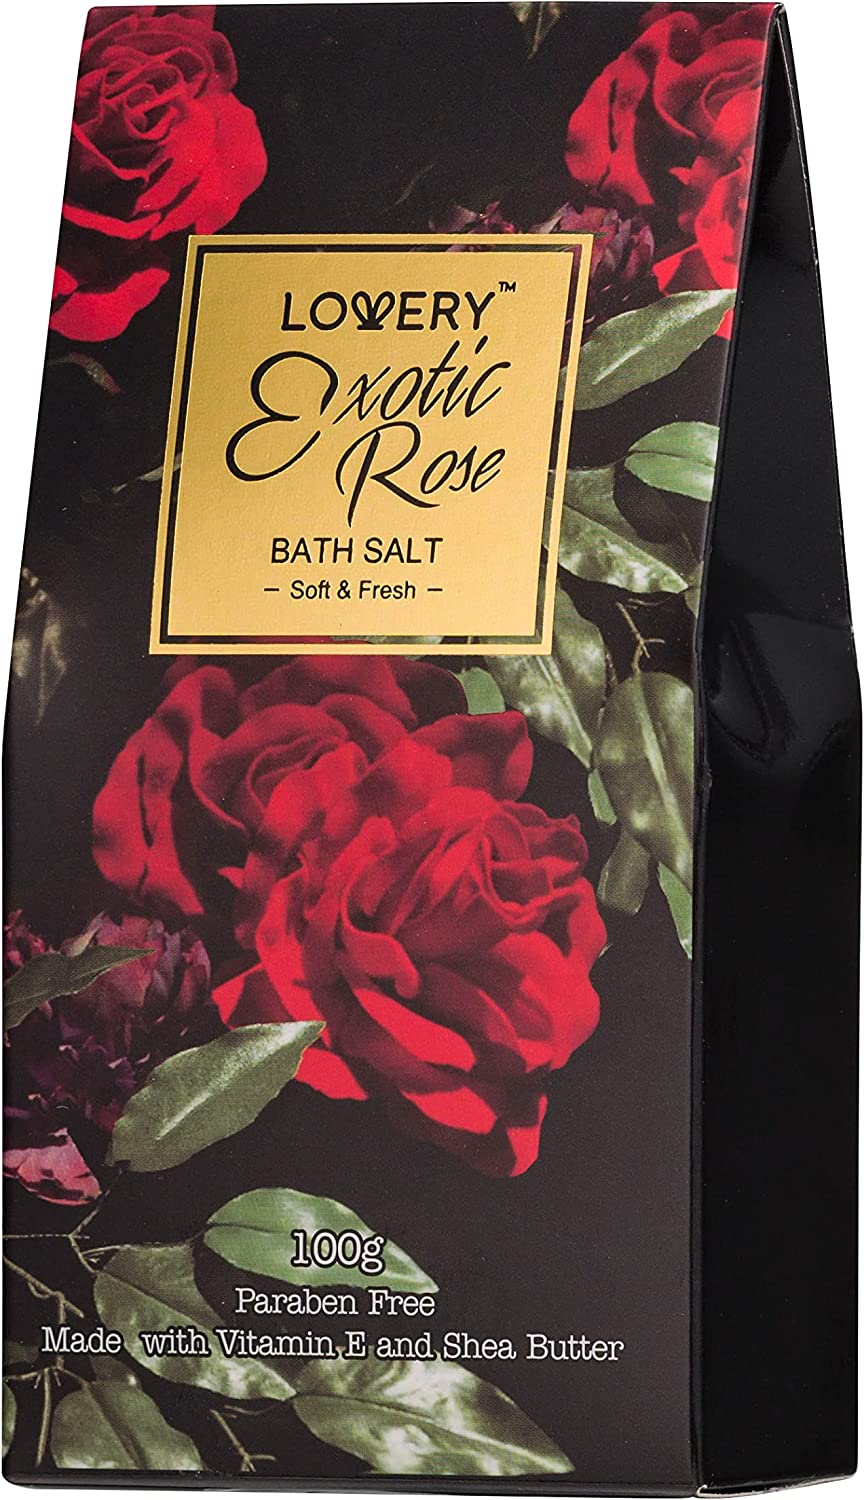 Valentine Exotic Rose Spa Gift Basket - 13pc Self Care Set